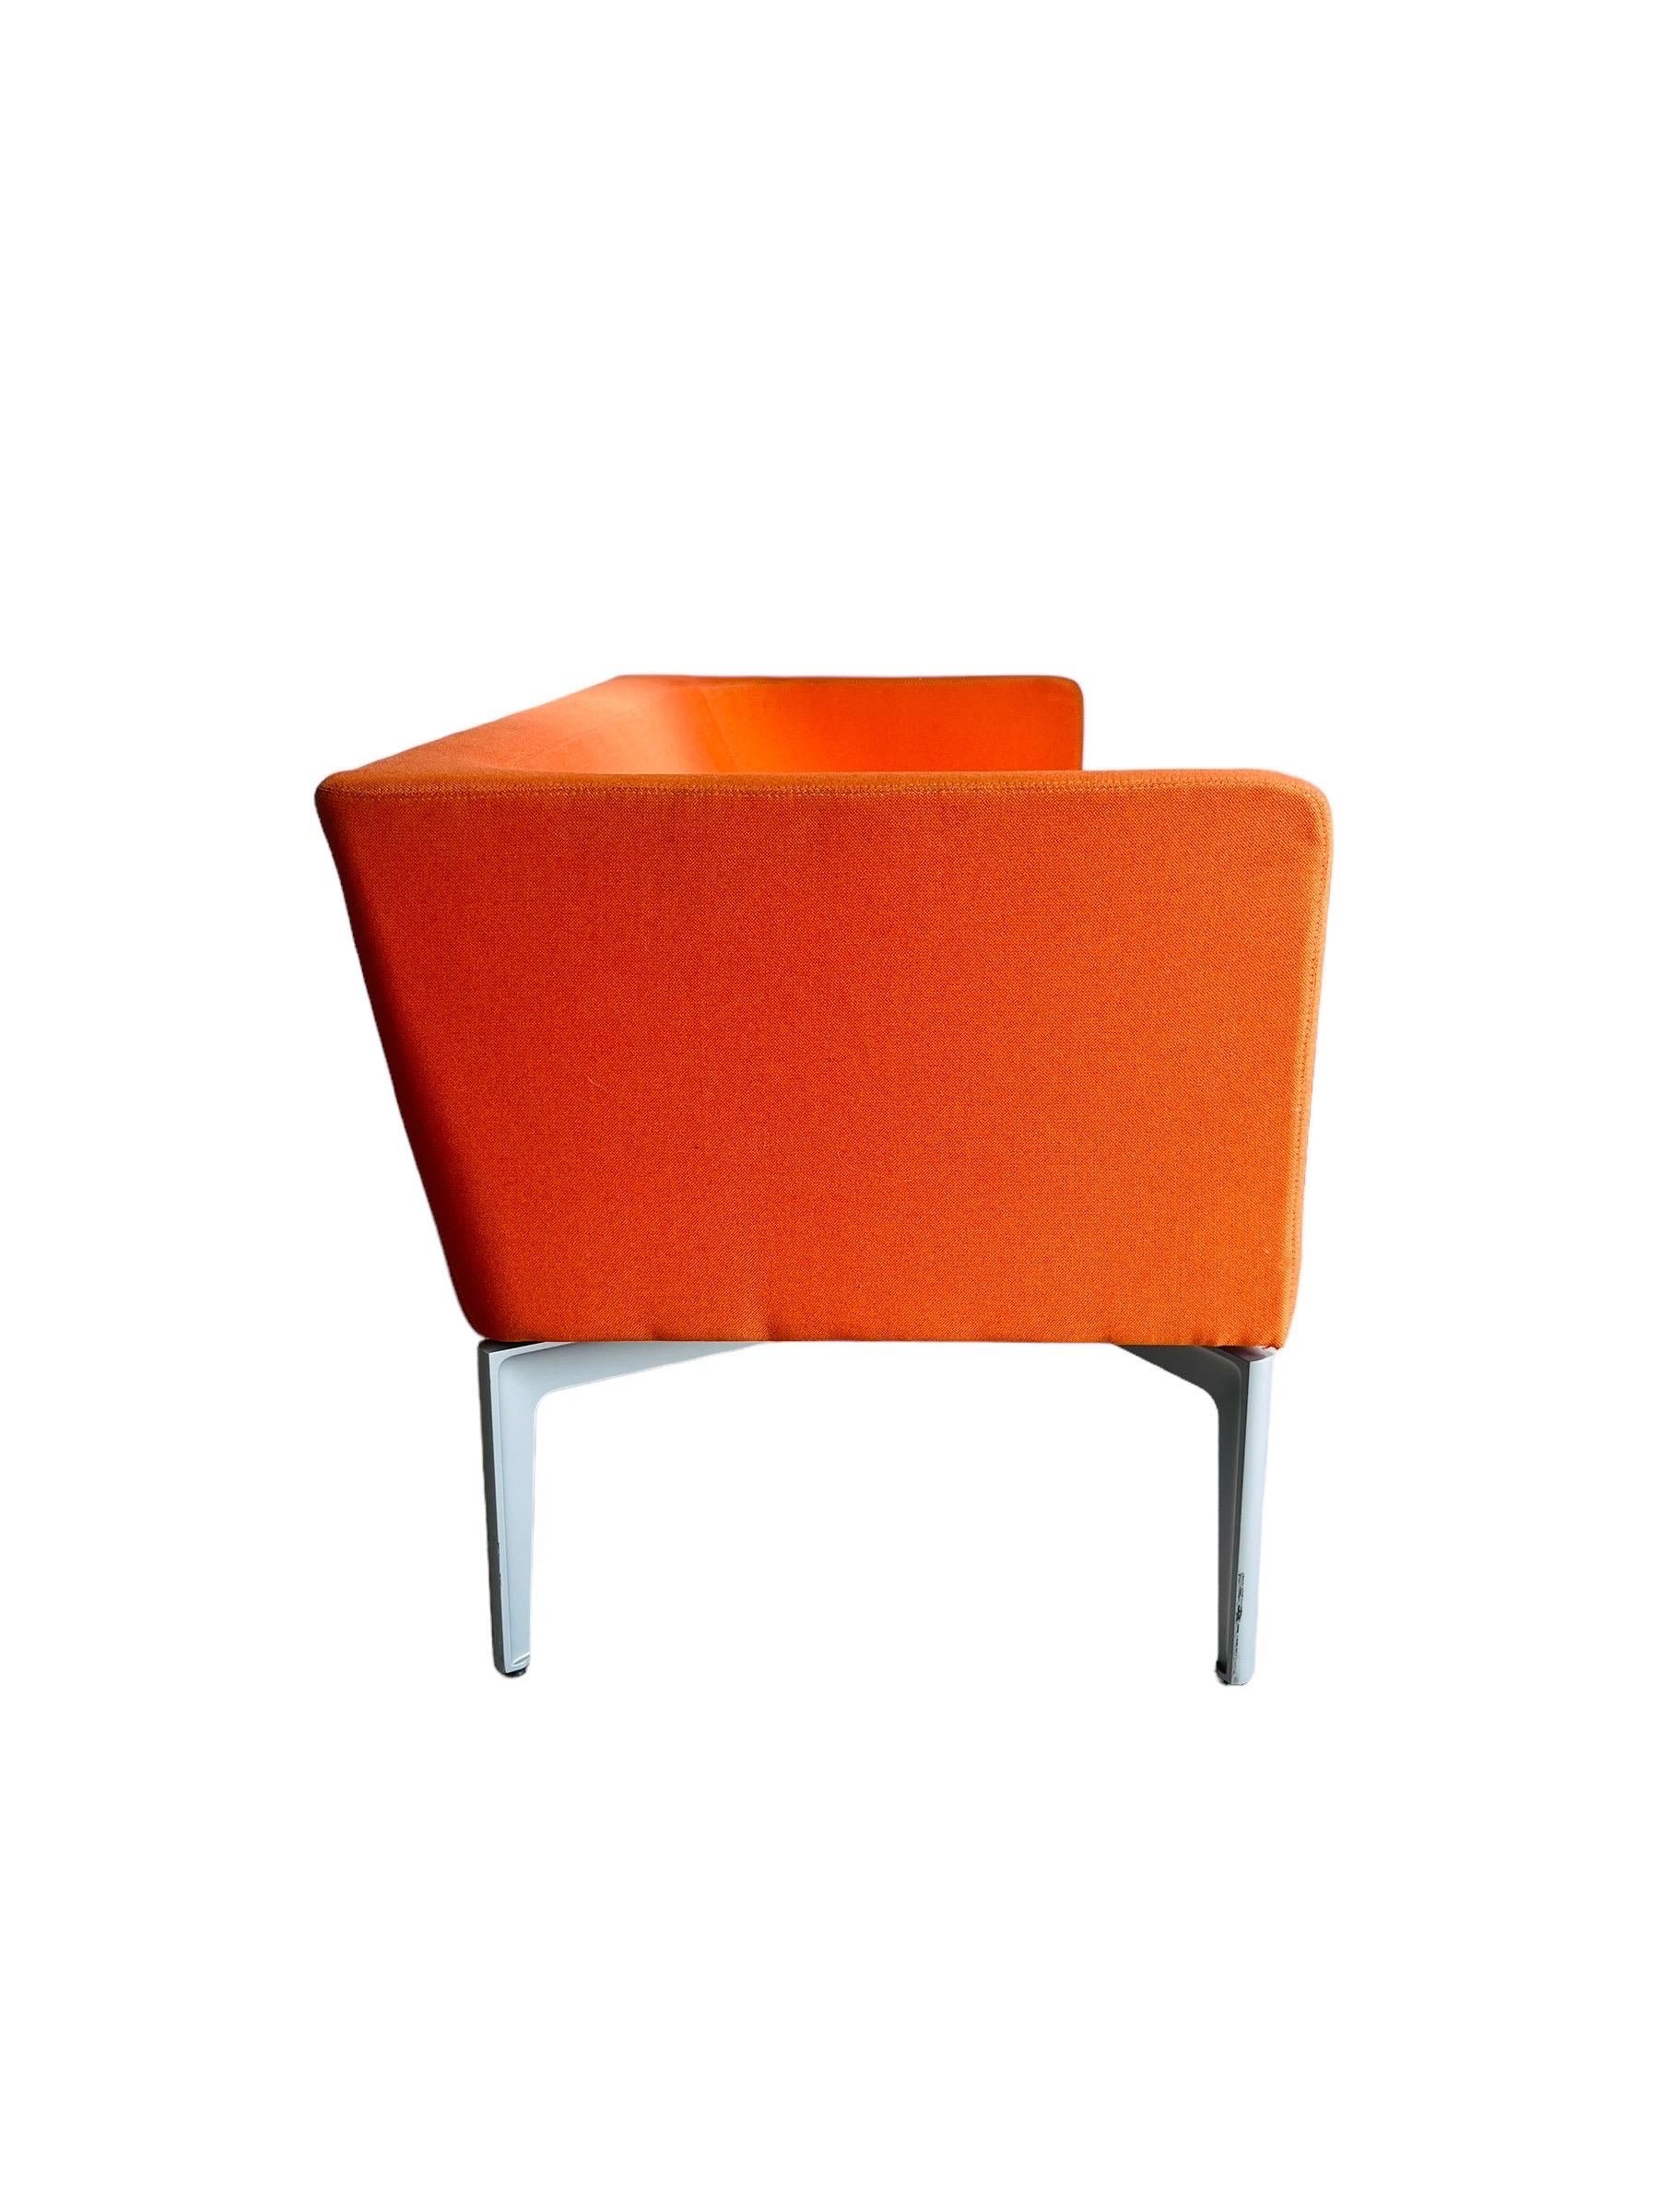 Steelcase Bivi Rumble Seat Collection: Vibrant Orange Modern Sofa 5